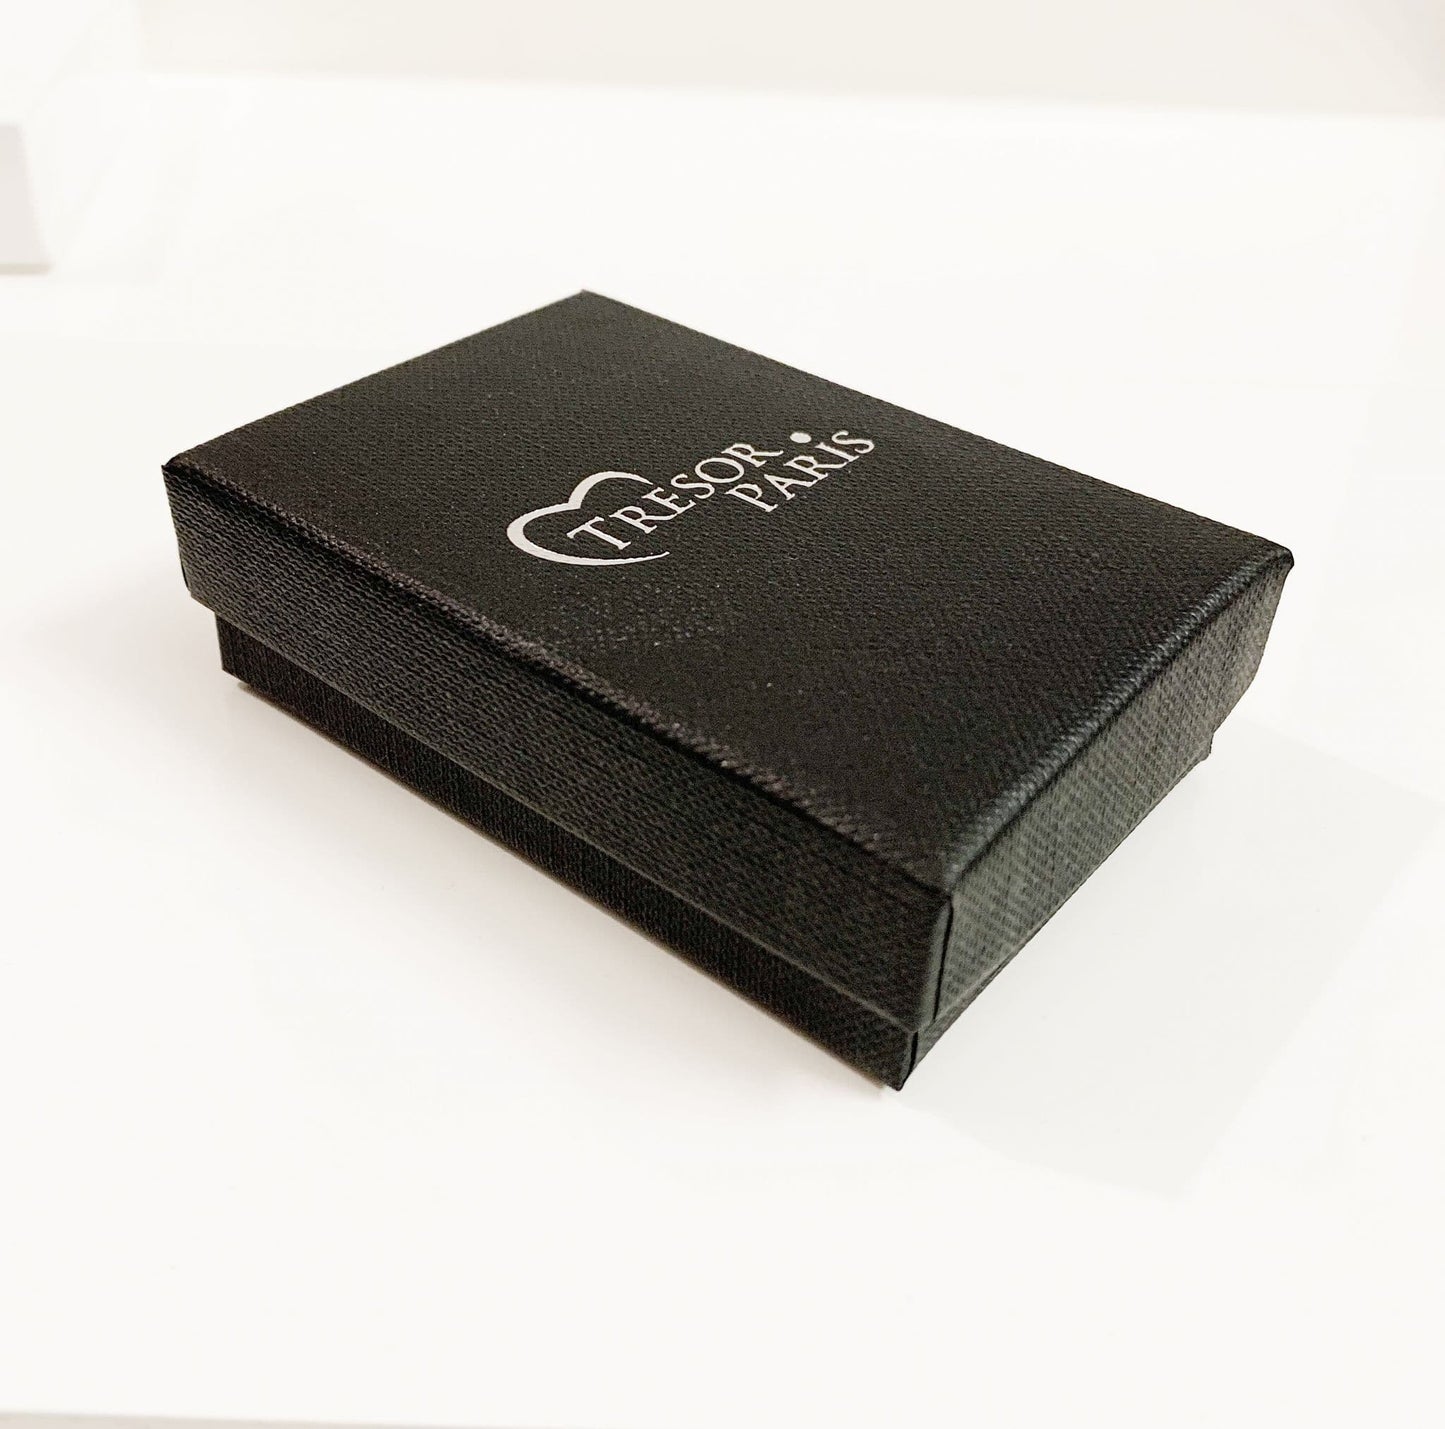 Tresor Paris gift box